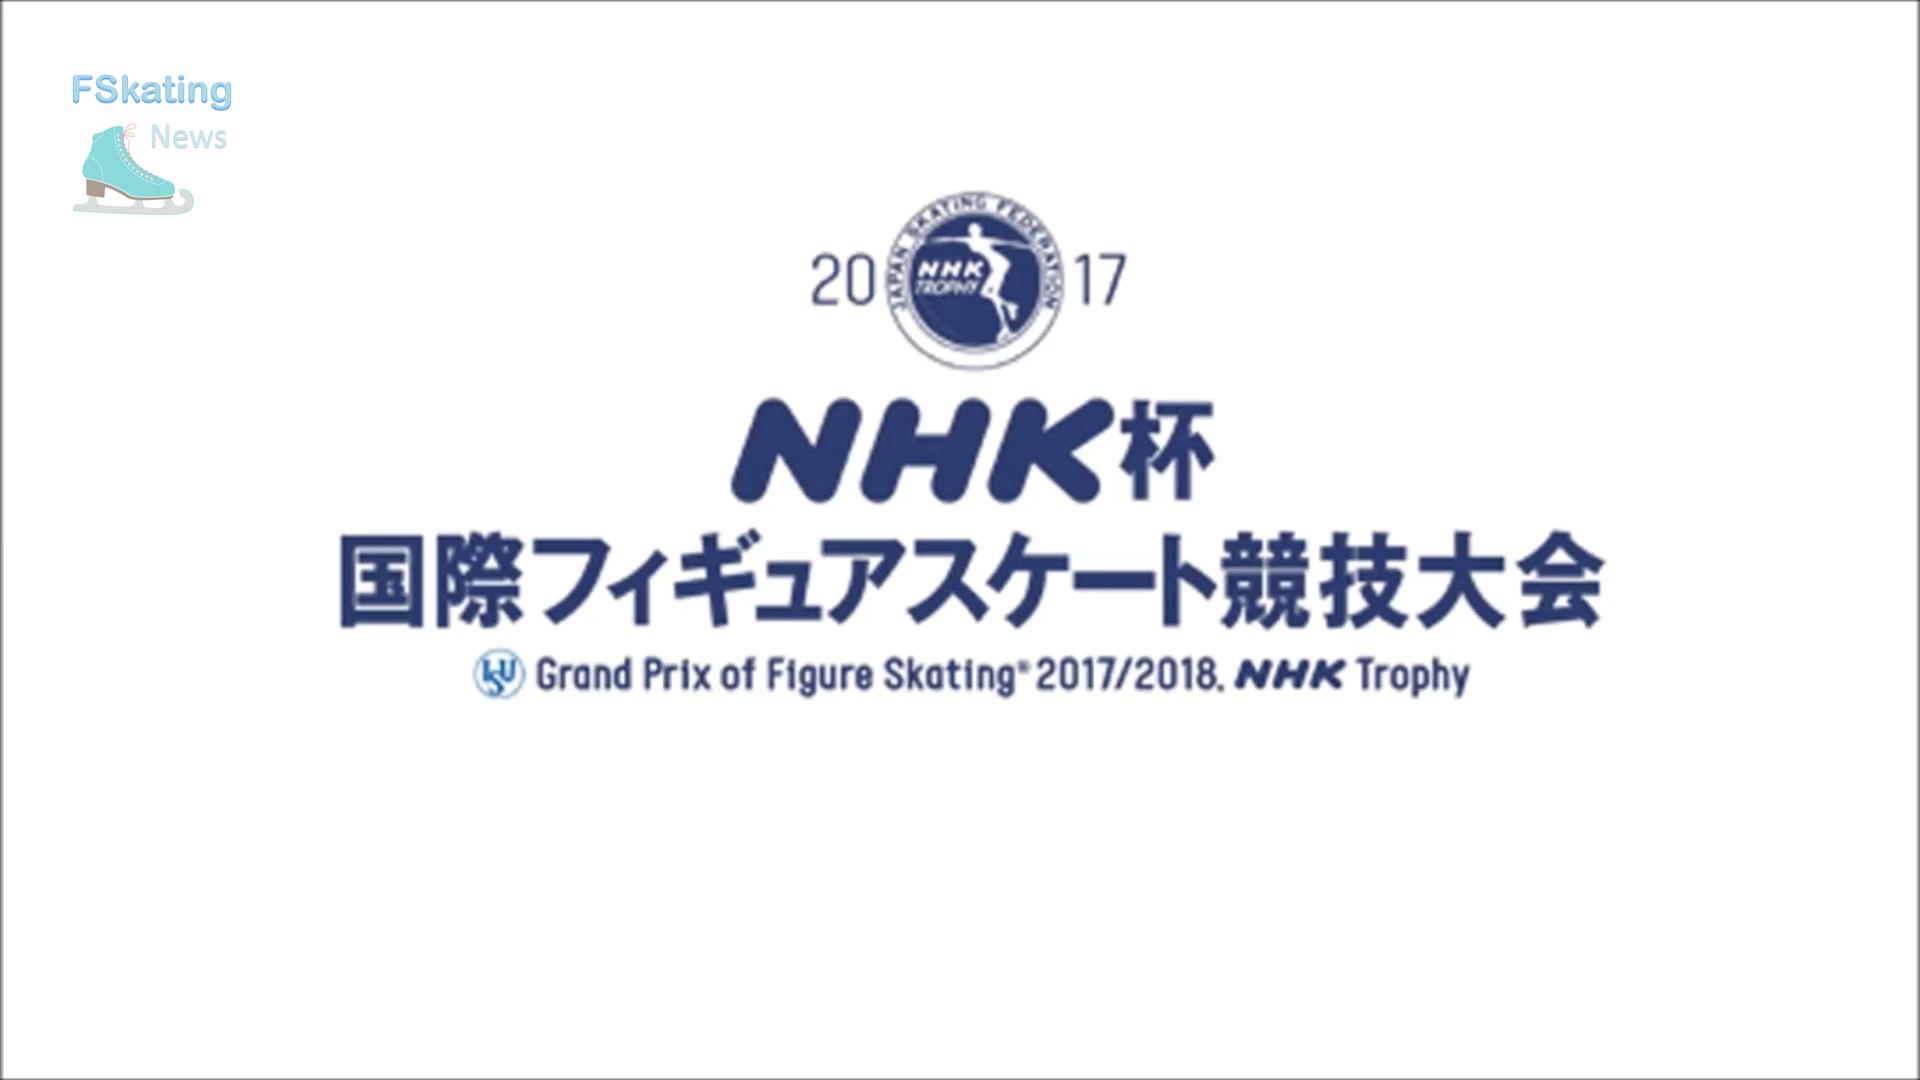 NHK Trophy 2017. Чем он нам запомнился